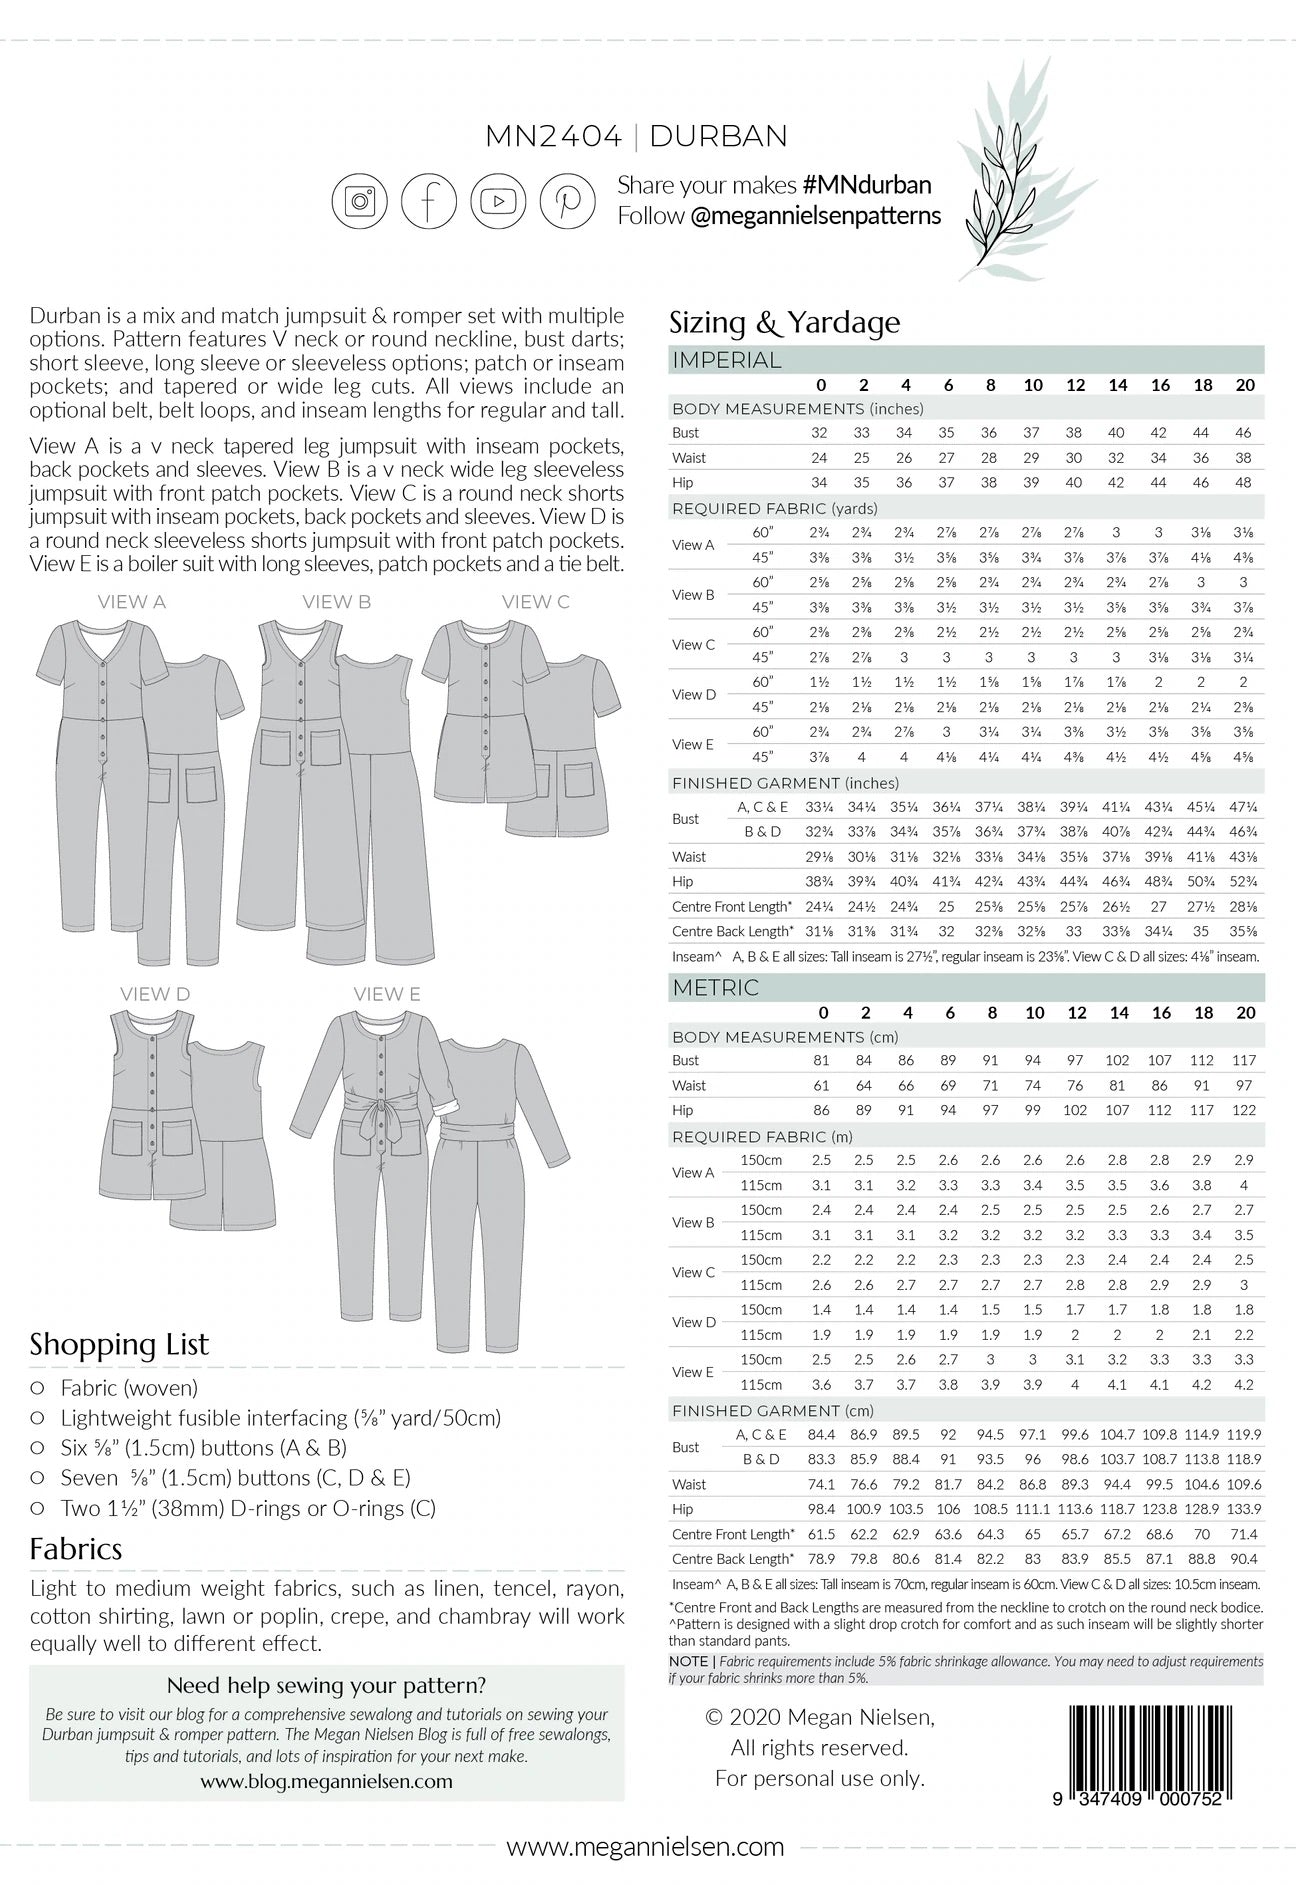 Megan Nielsen - Durban Jumpsuit & Romper Sewing Pattern